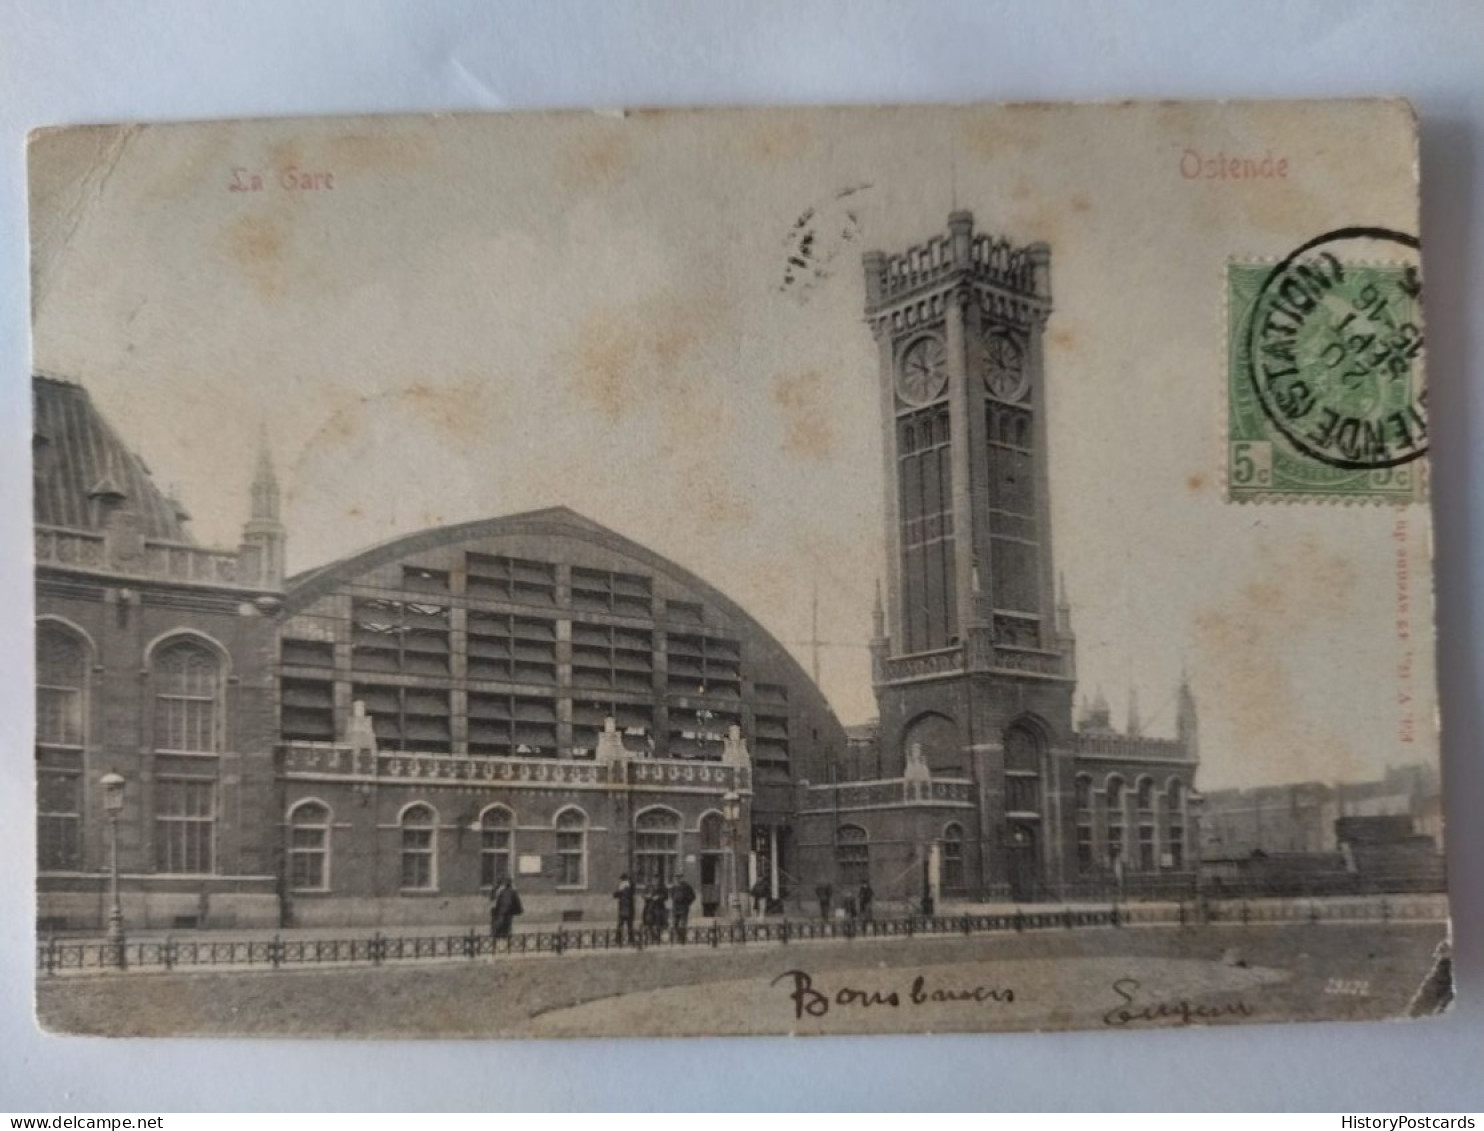 Ostende, La Gare, Bahnhof, Westflandern, 1905 - Oostende